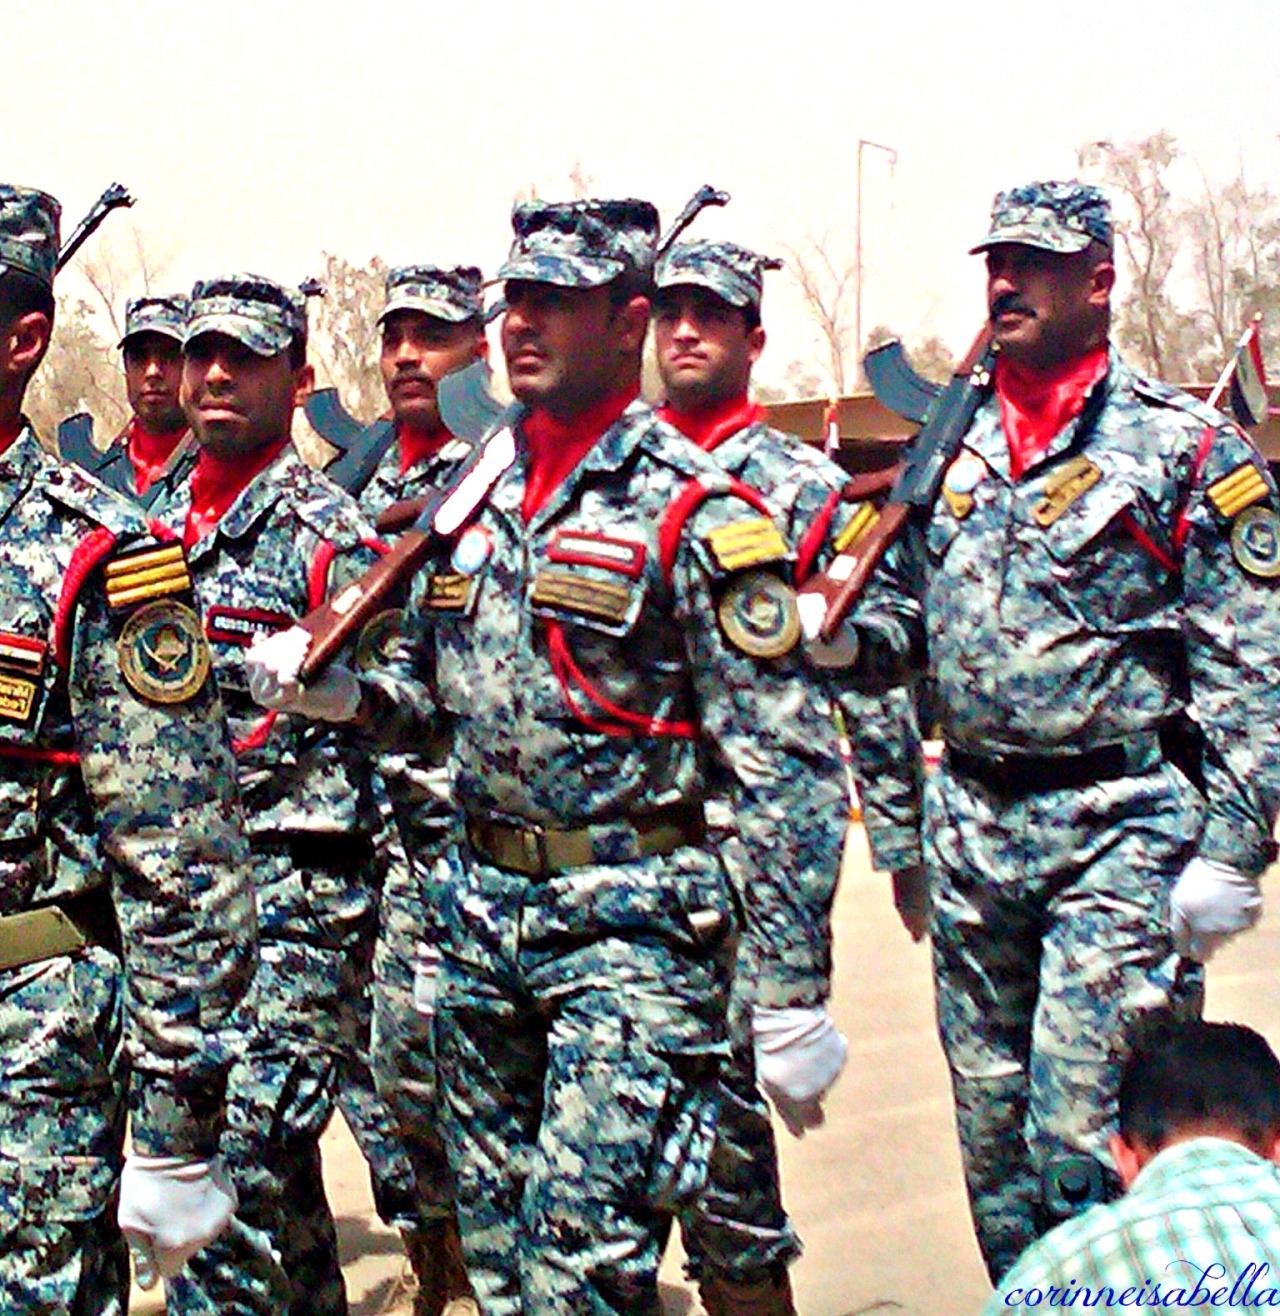 Iraq Federal Police Training Academy – Graduation day parade